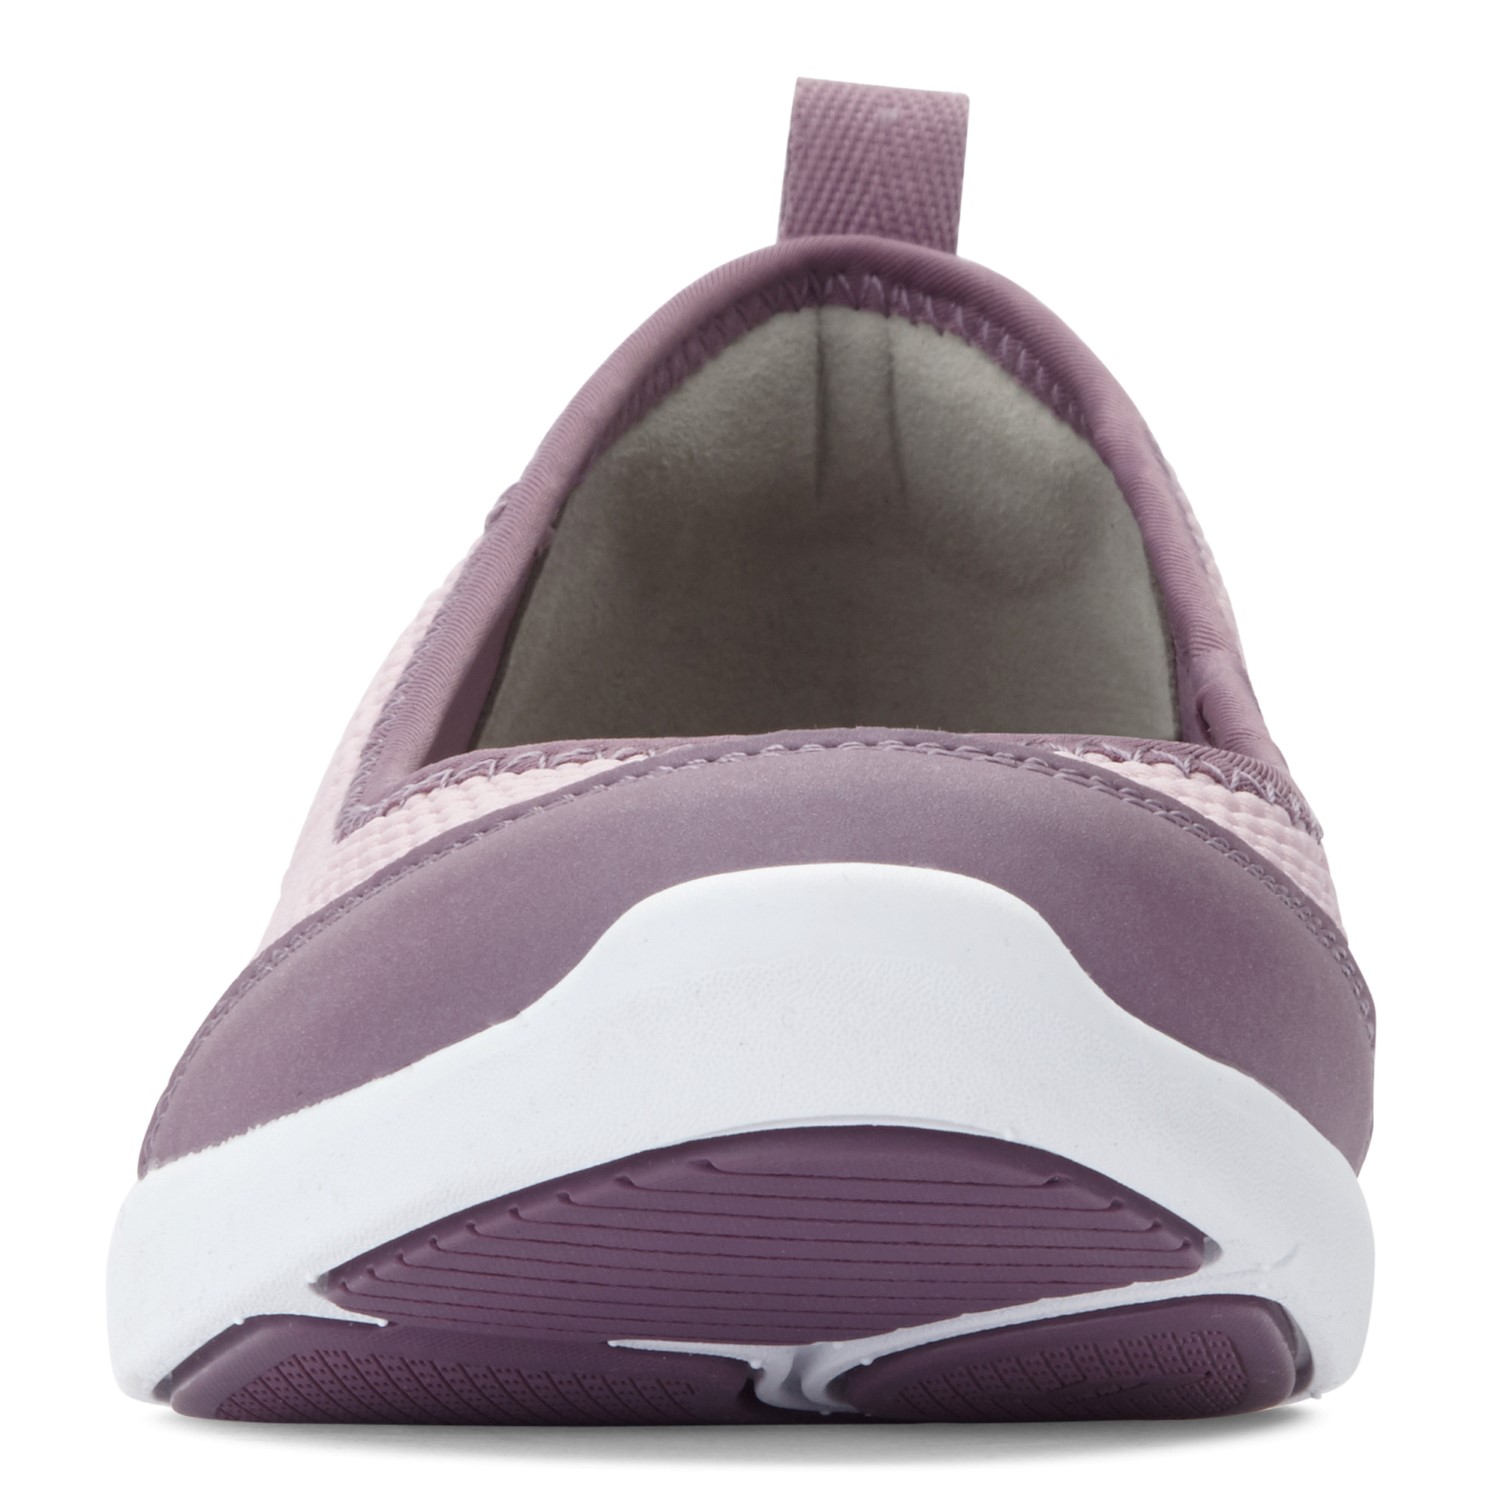 vionic sena slip on sneaker